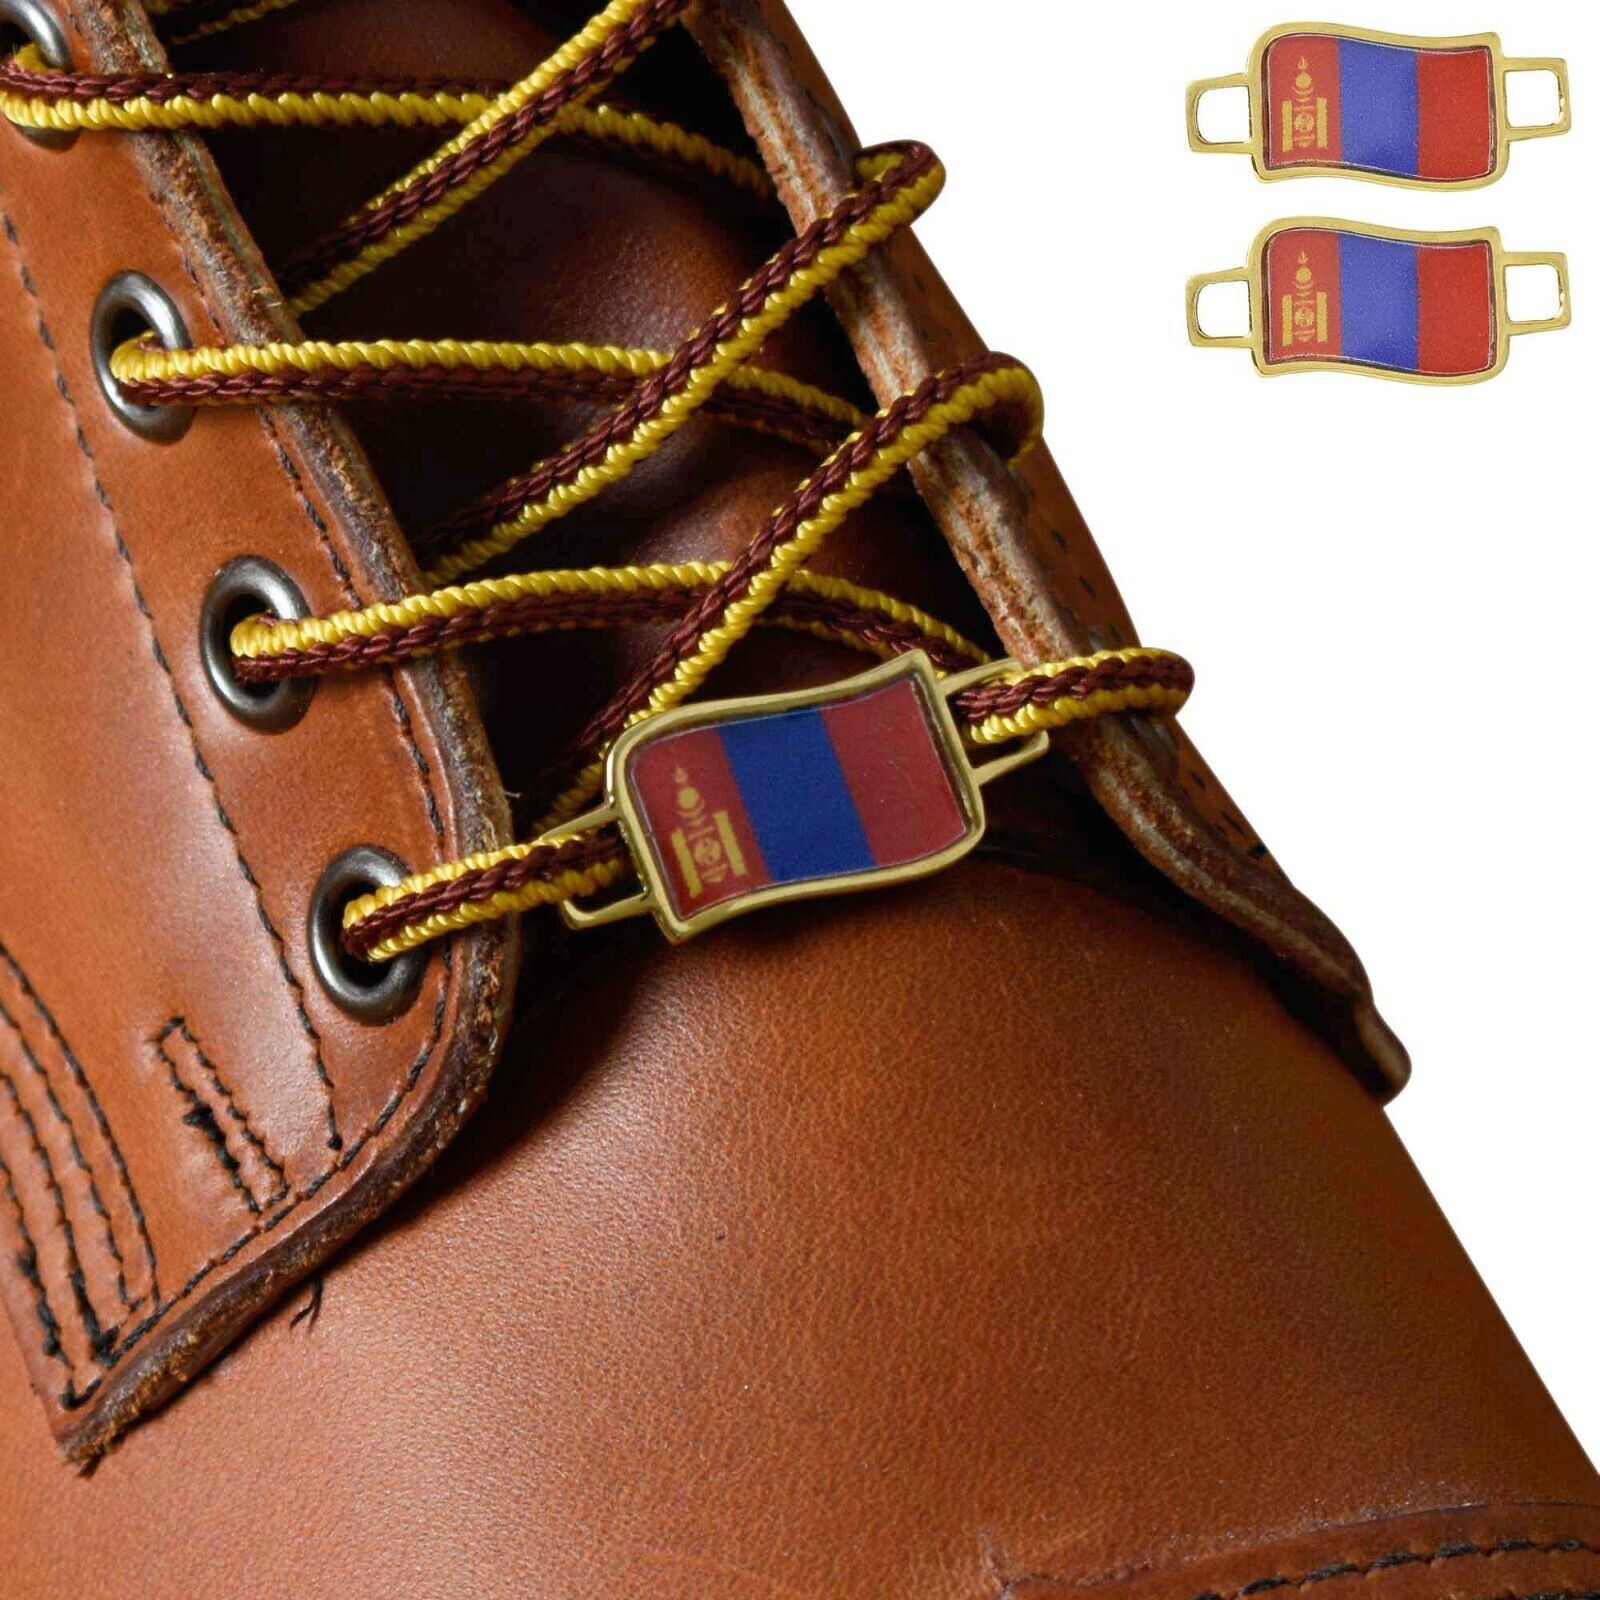 Mongolia Flags Shoes Boot Shoelace Keeper Holder Charm BrooklynMaker